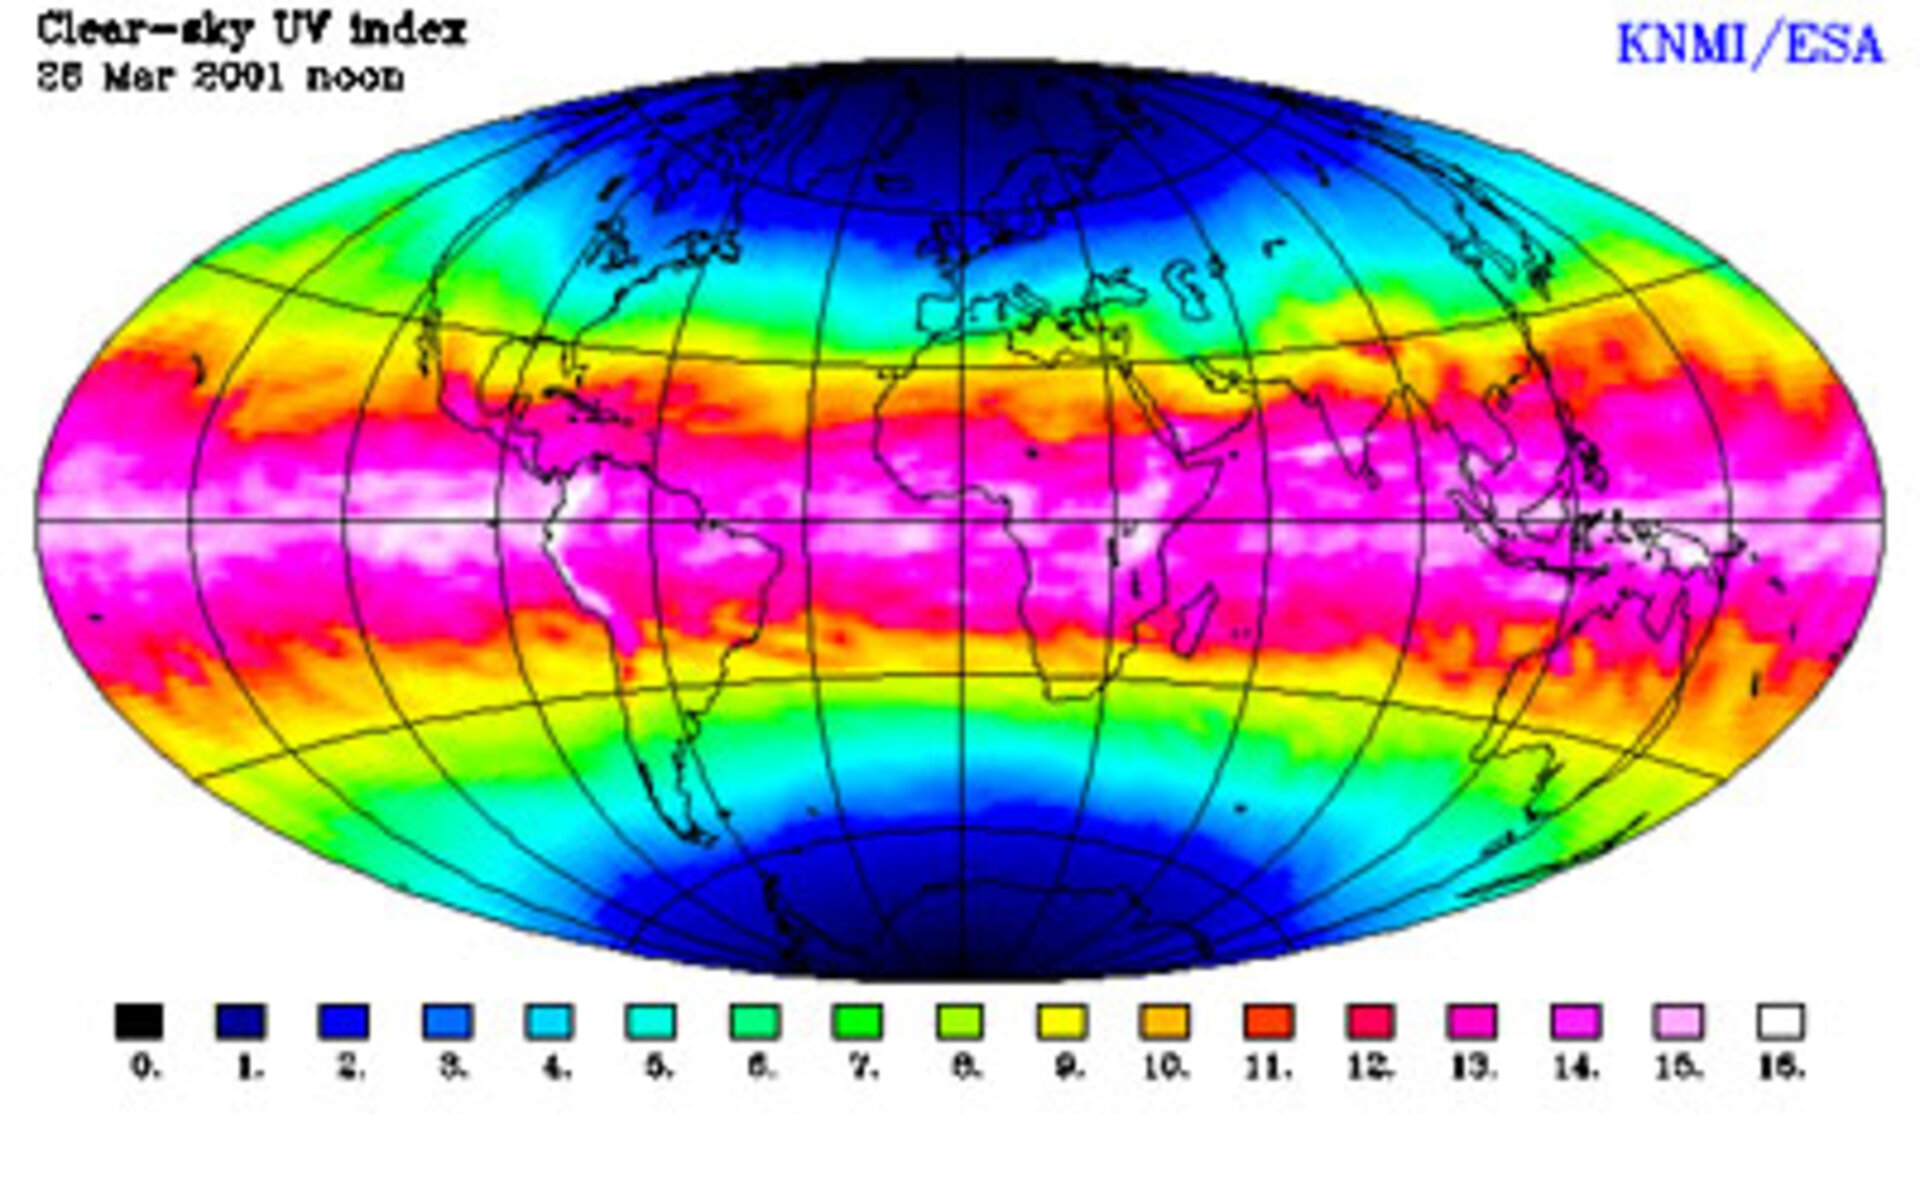 Global_clear-sky_UV_index_26_March_2001_pillars.jpg